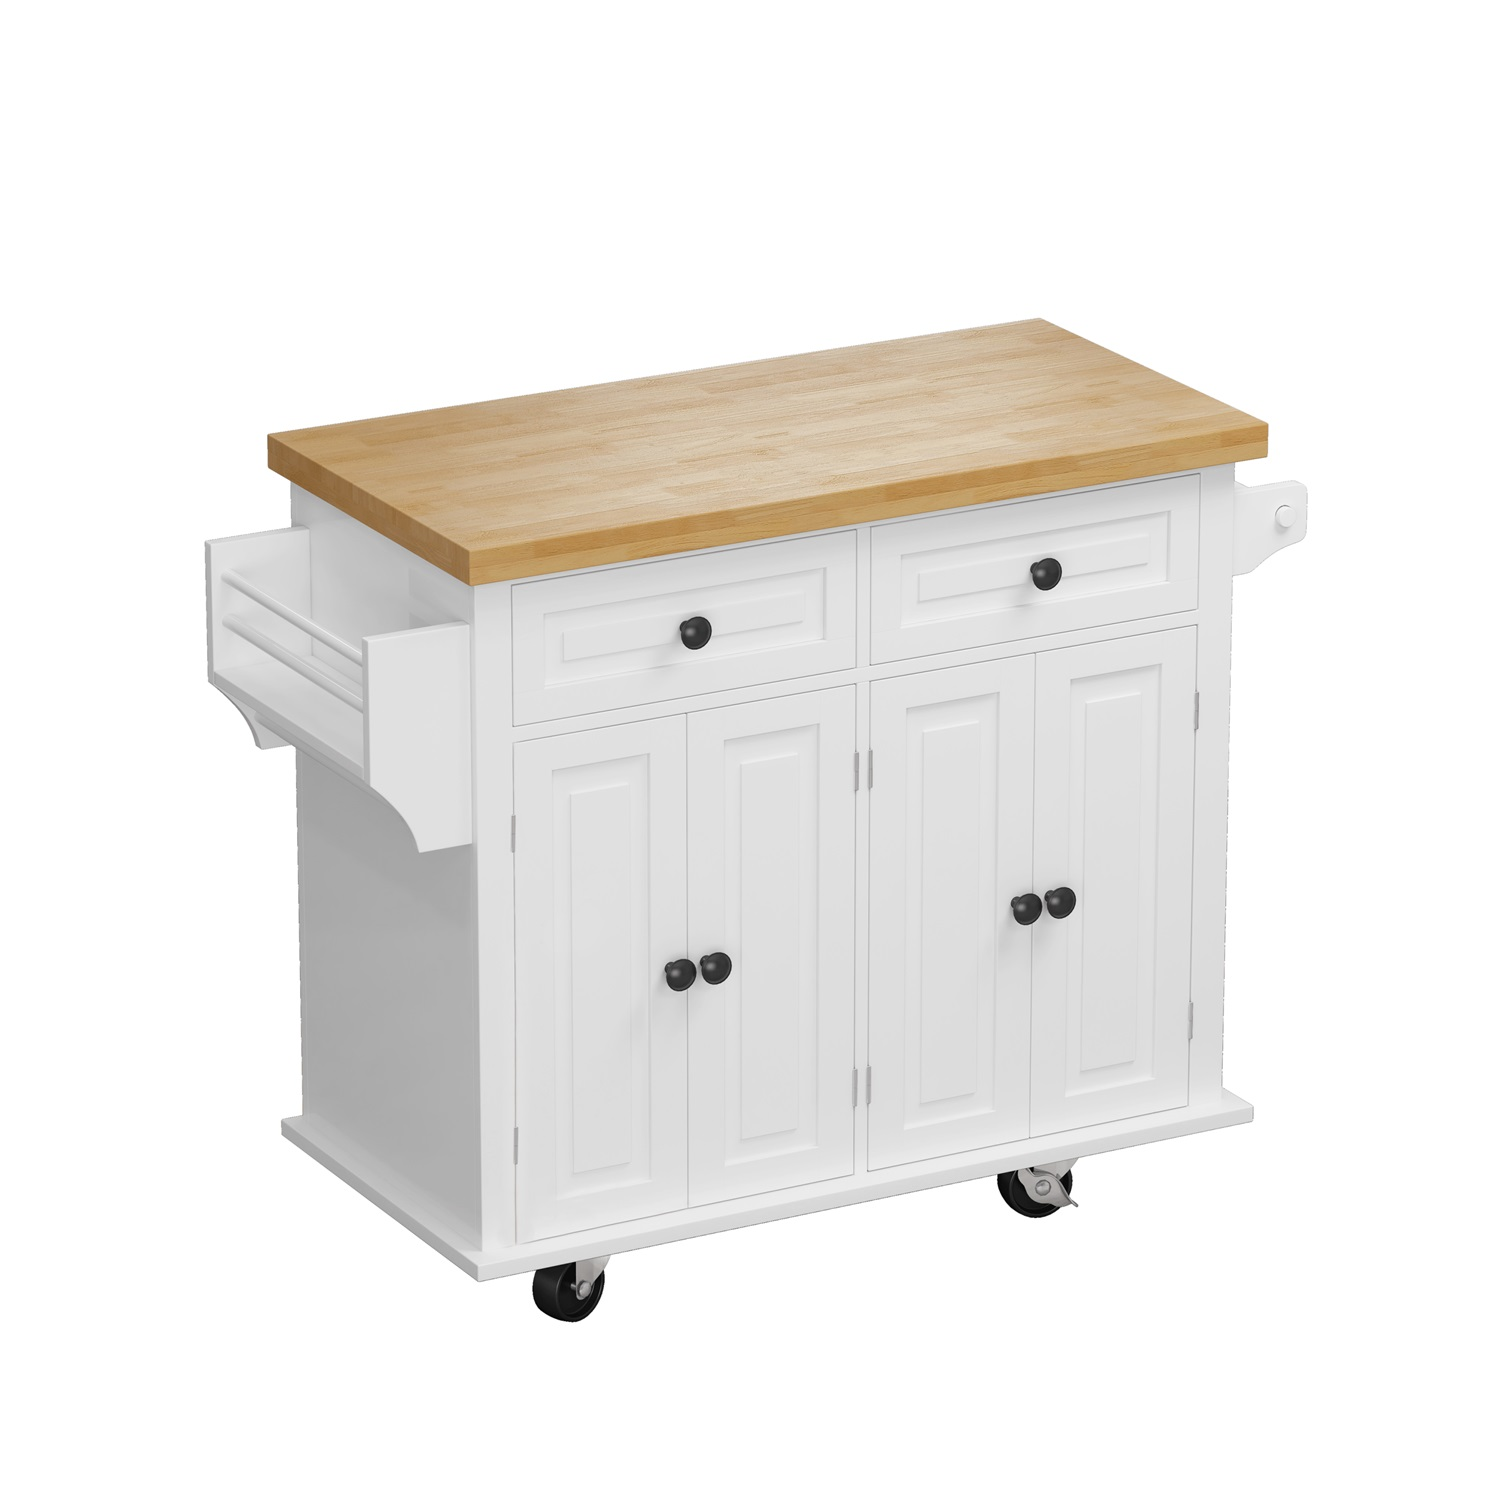 1st Choice Furniture Direct Kitchen Island Cart 1st Choice White Kitchen Island Cart w/ Cabinets, Drawers, Spice Rack